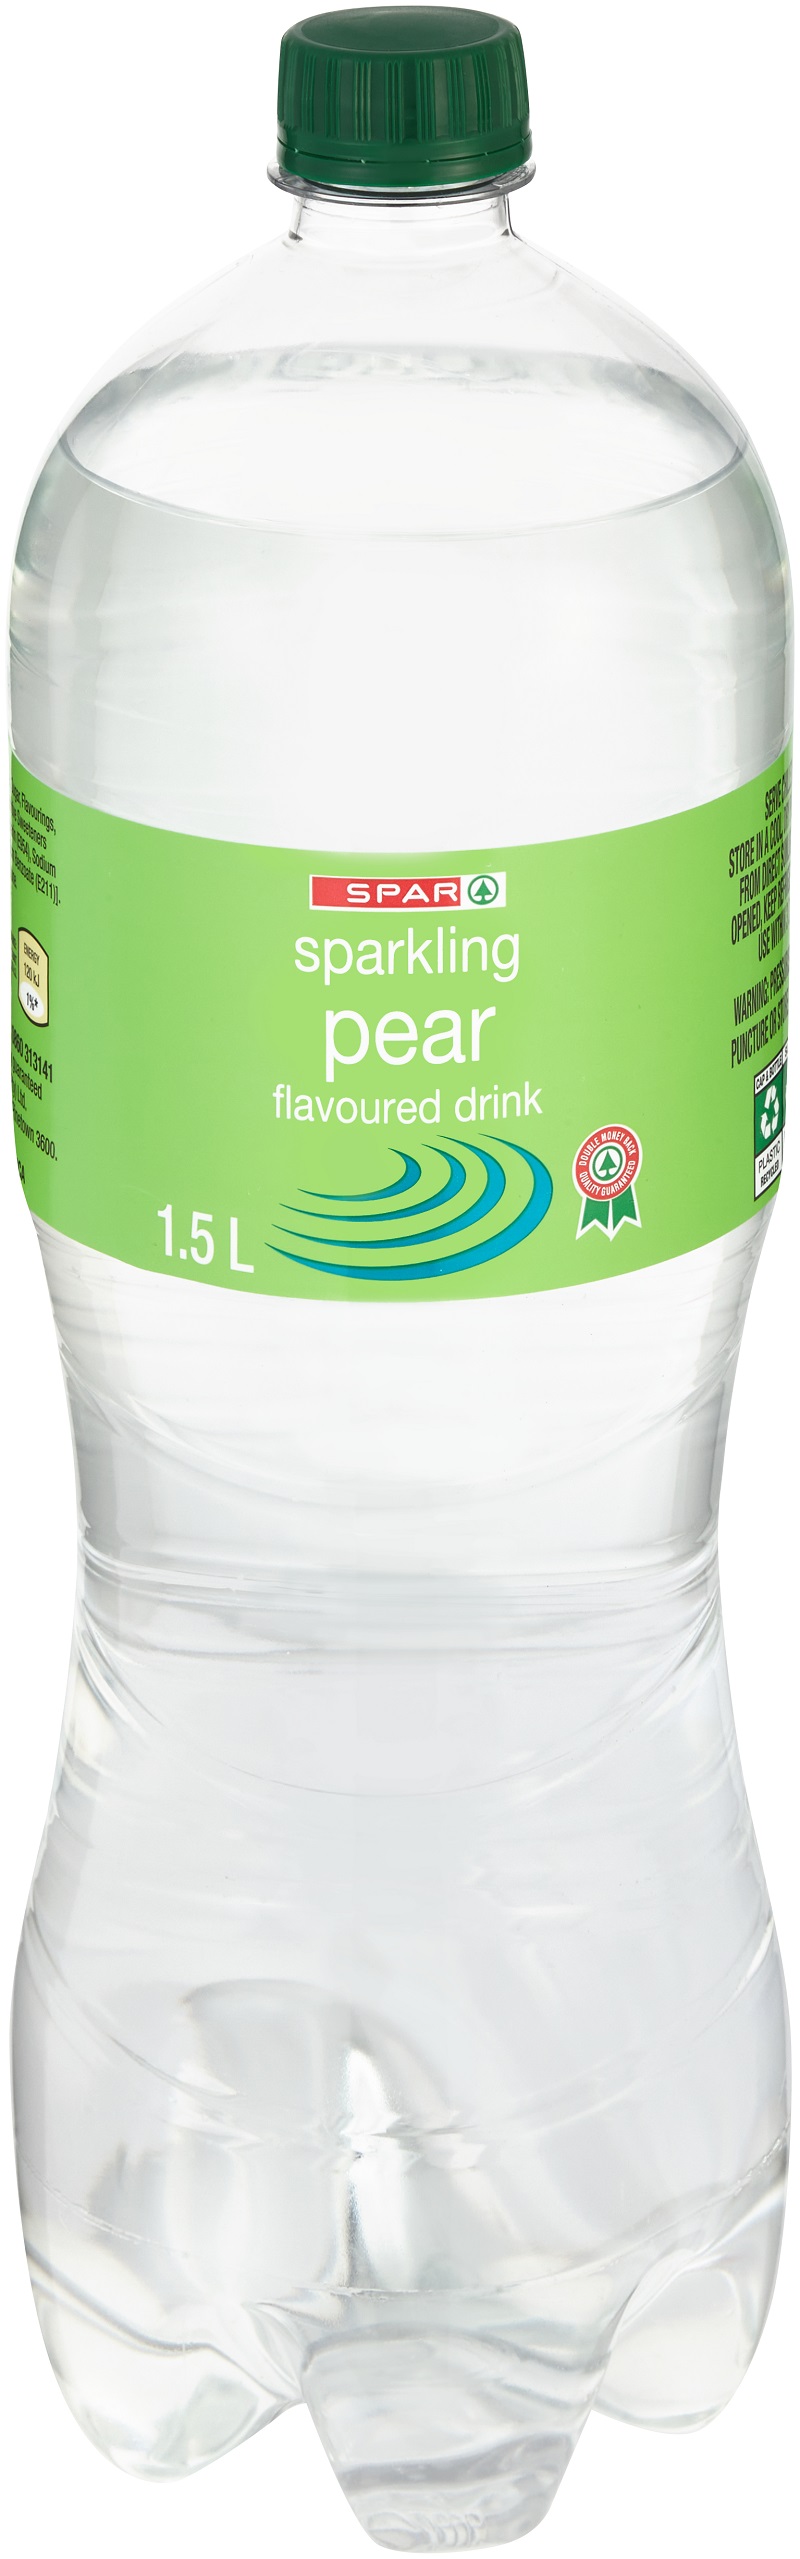 sparkling flavoured drink pear